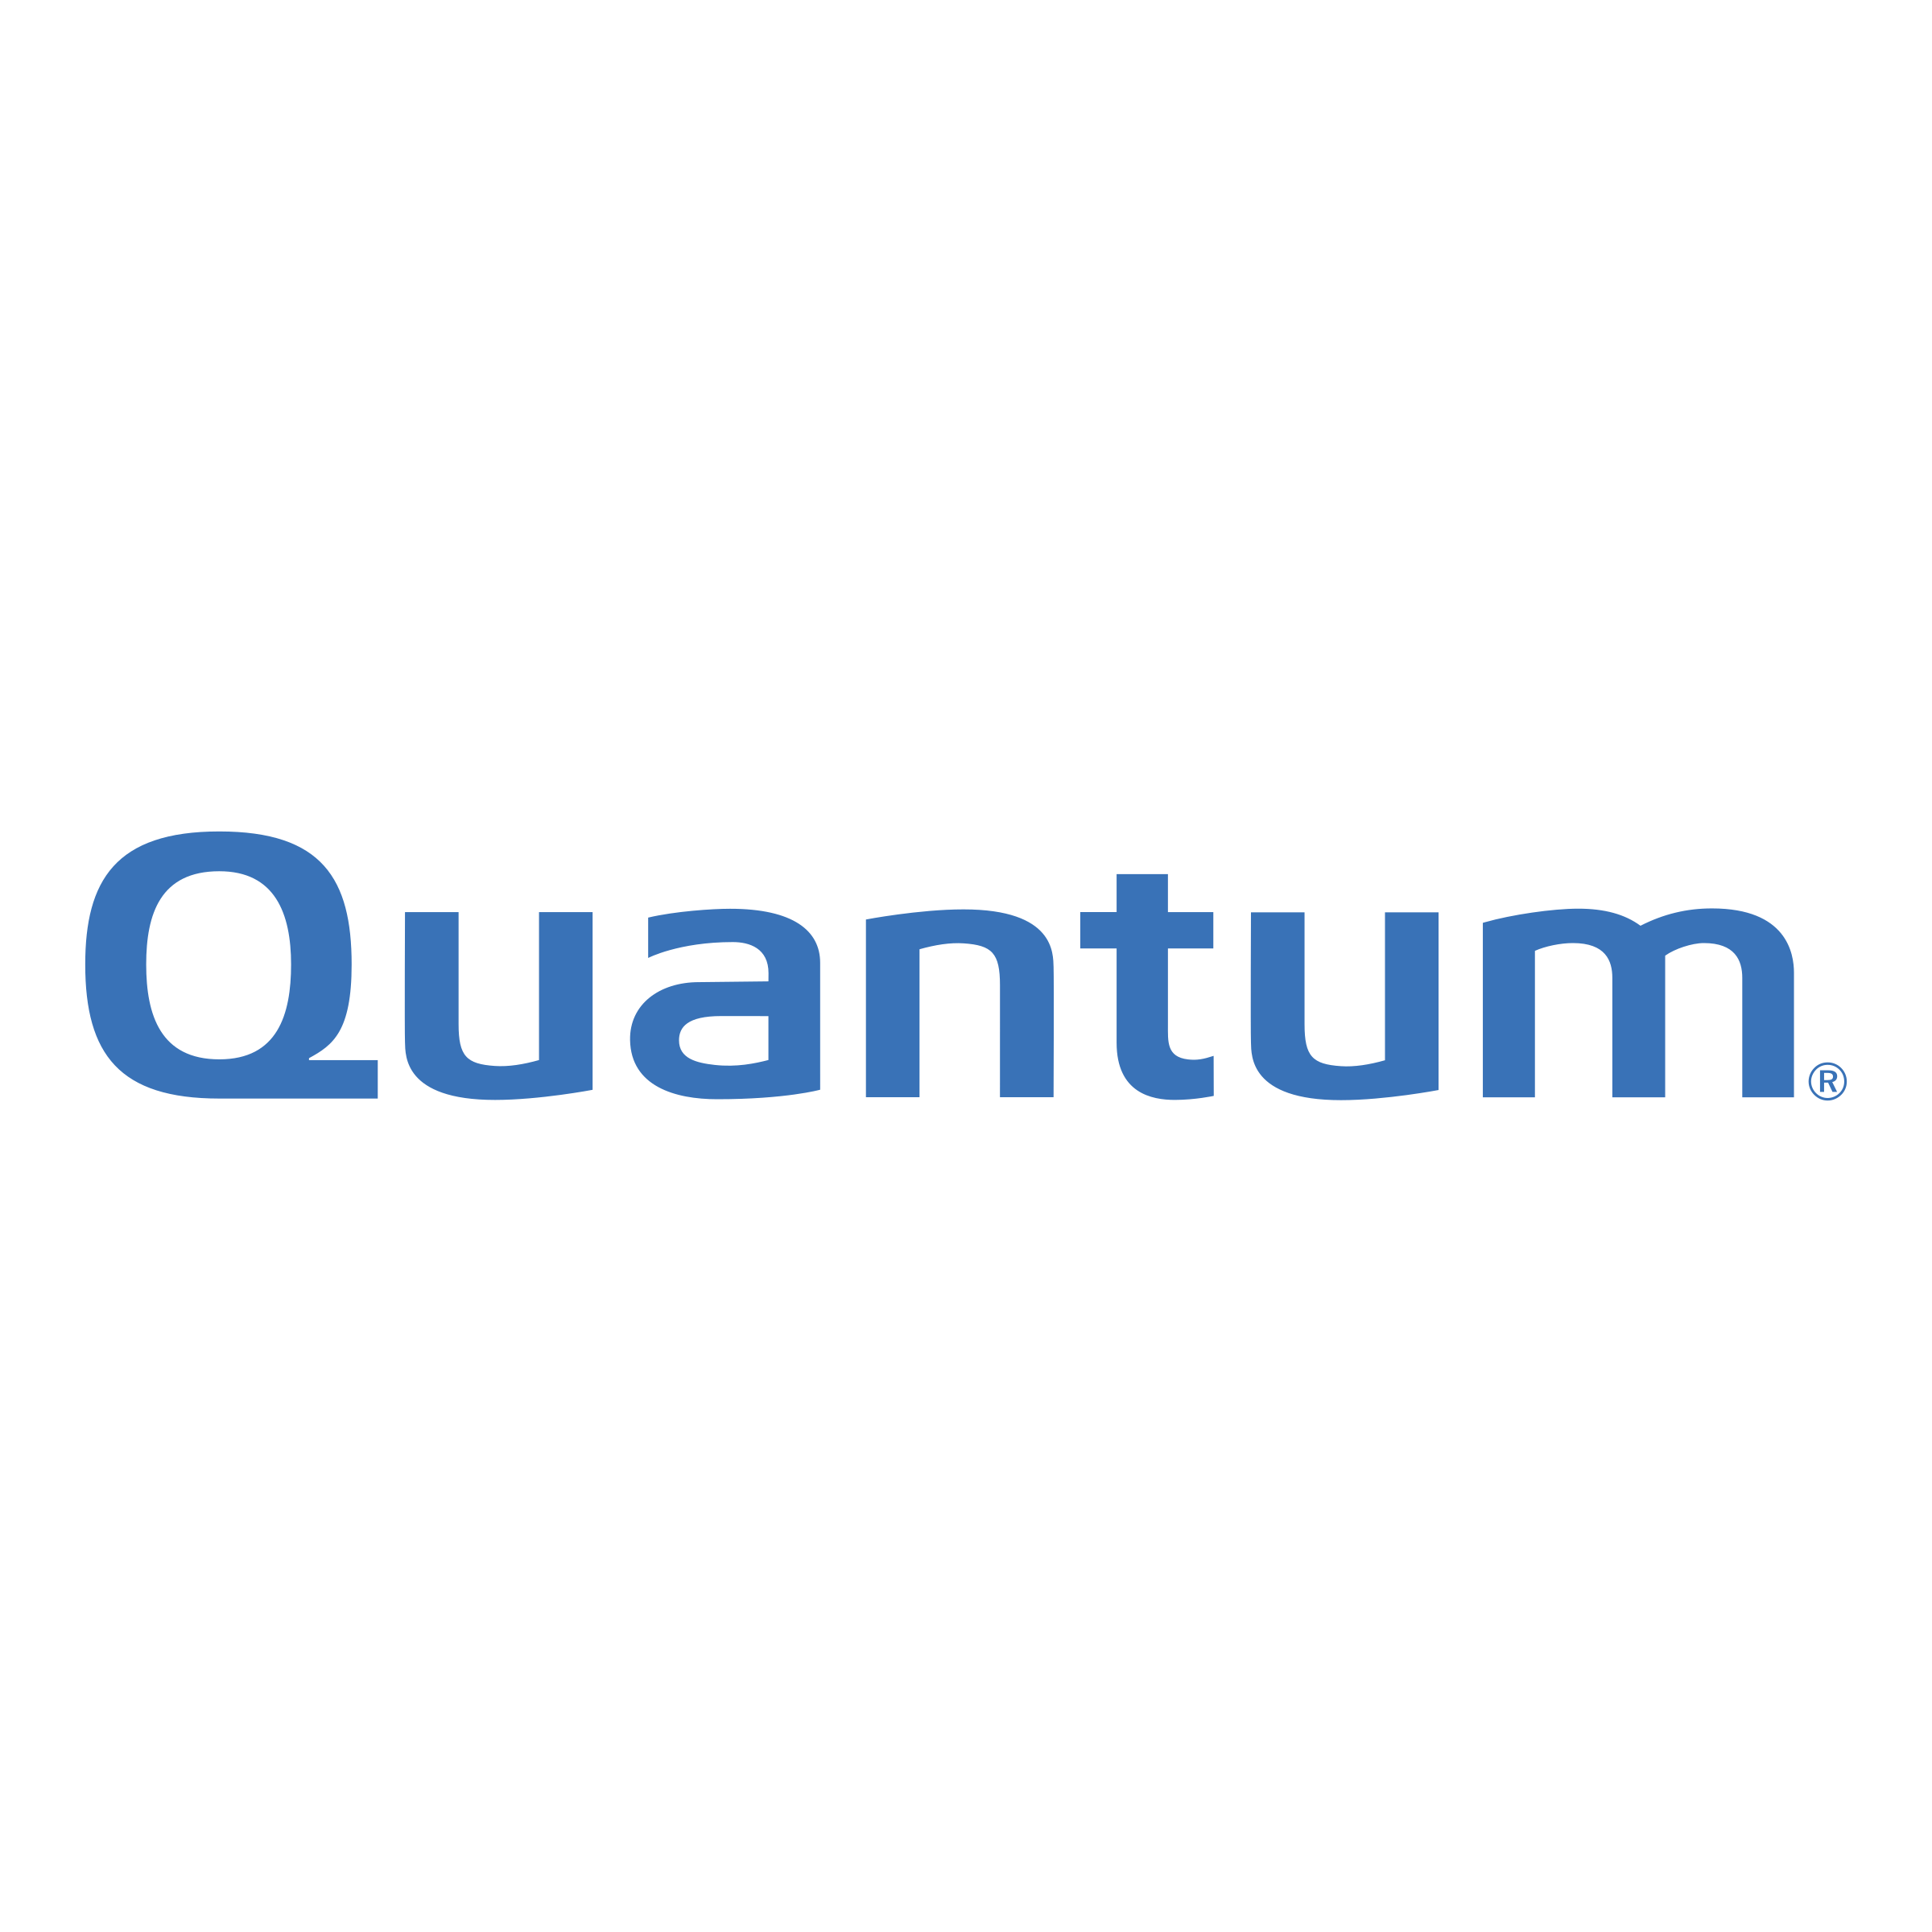 Quantum Logo - Quantum Logo PNG Transparent & SVG Vector